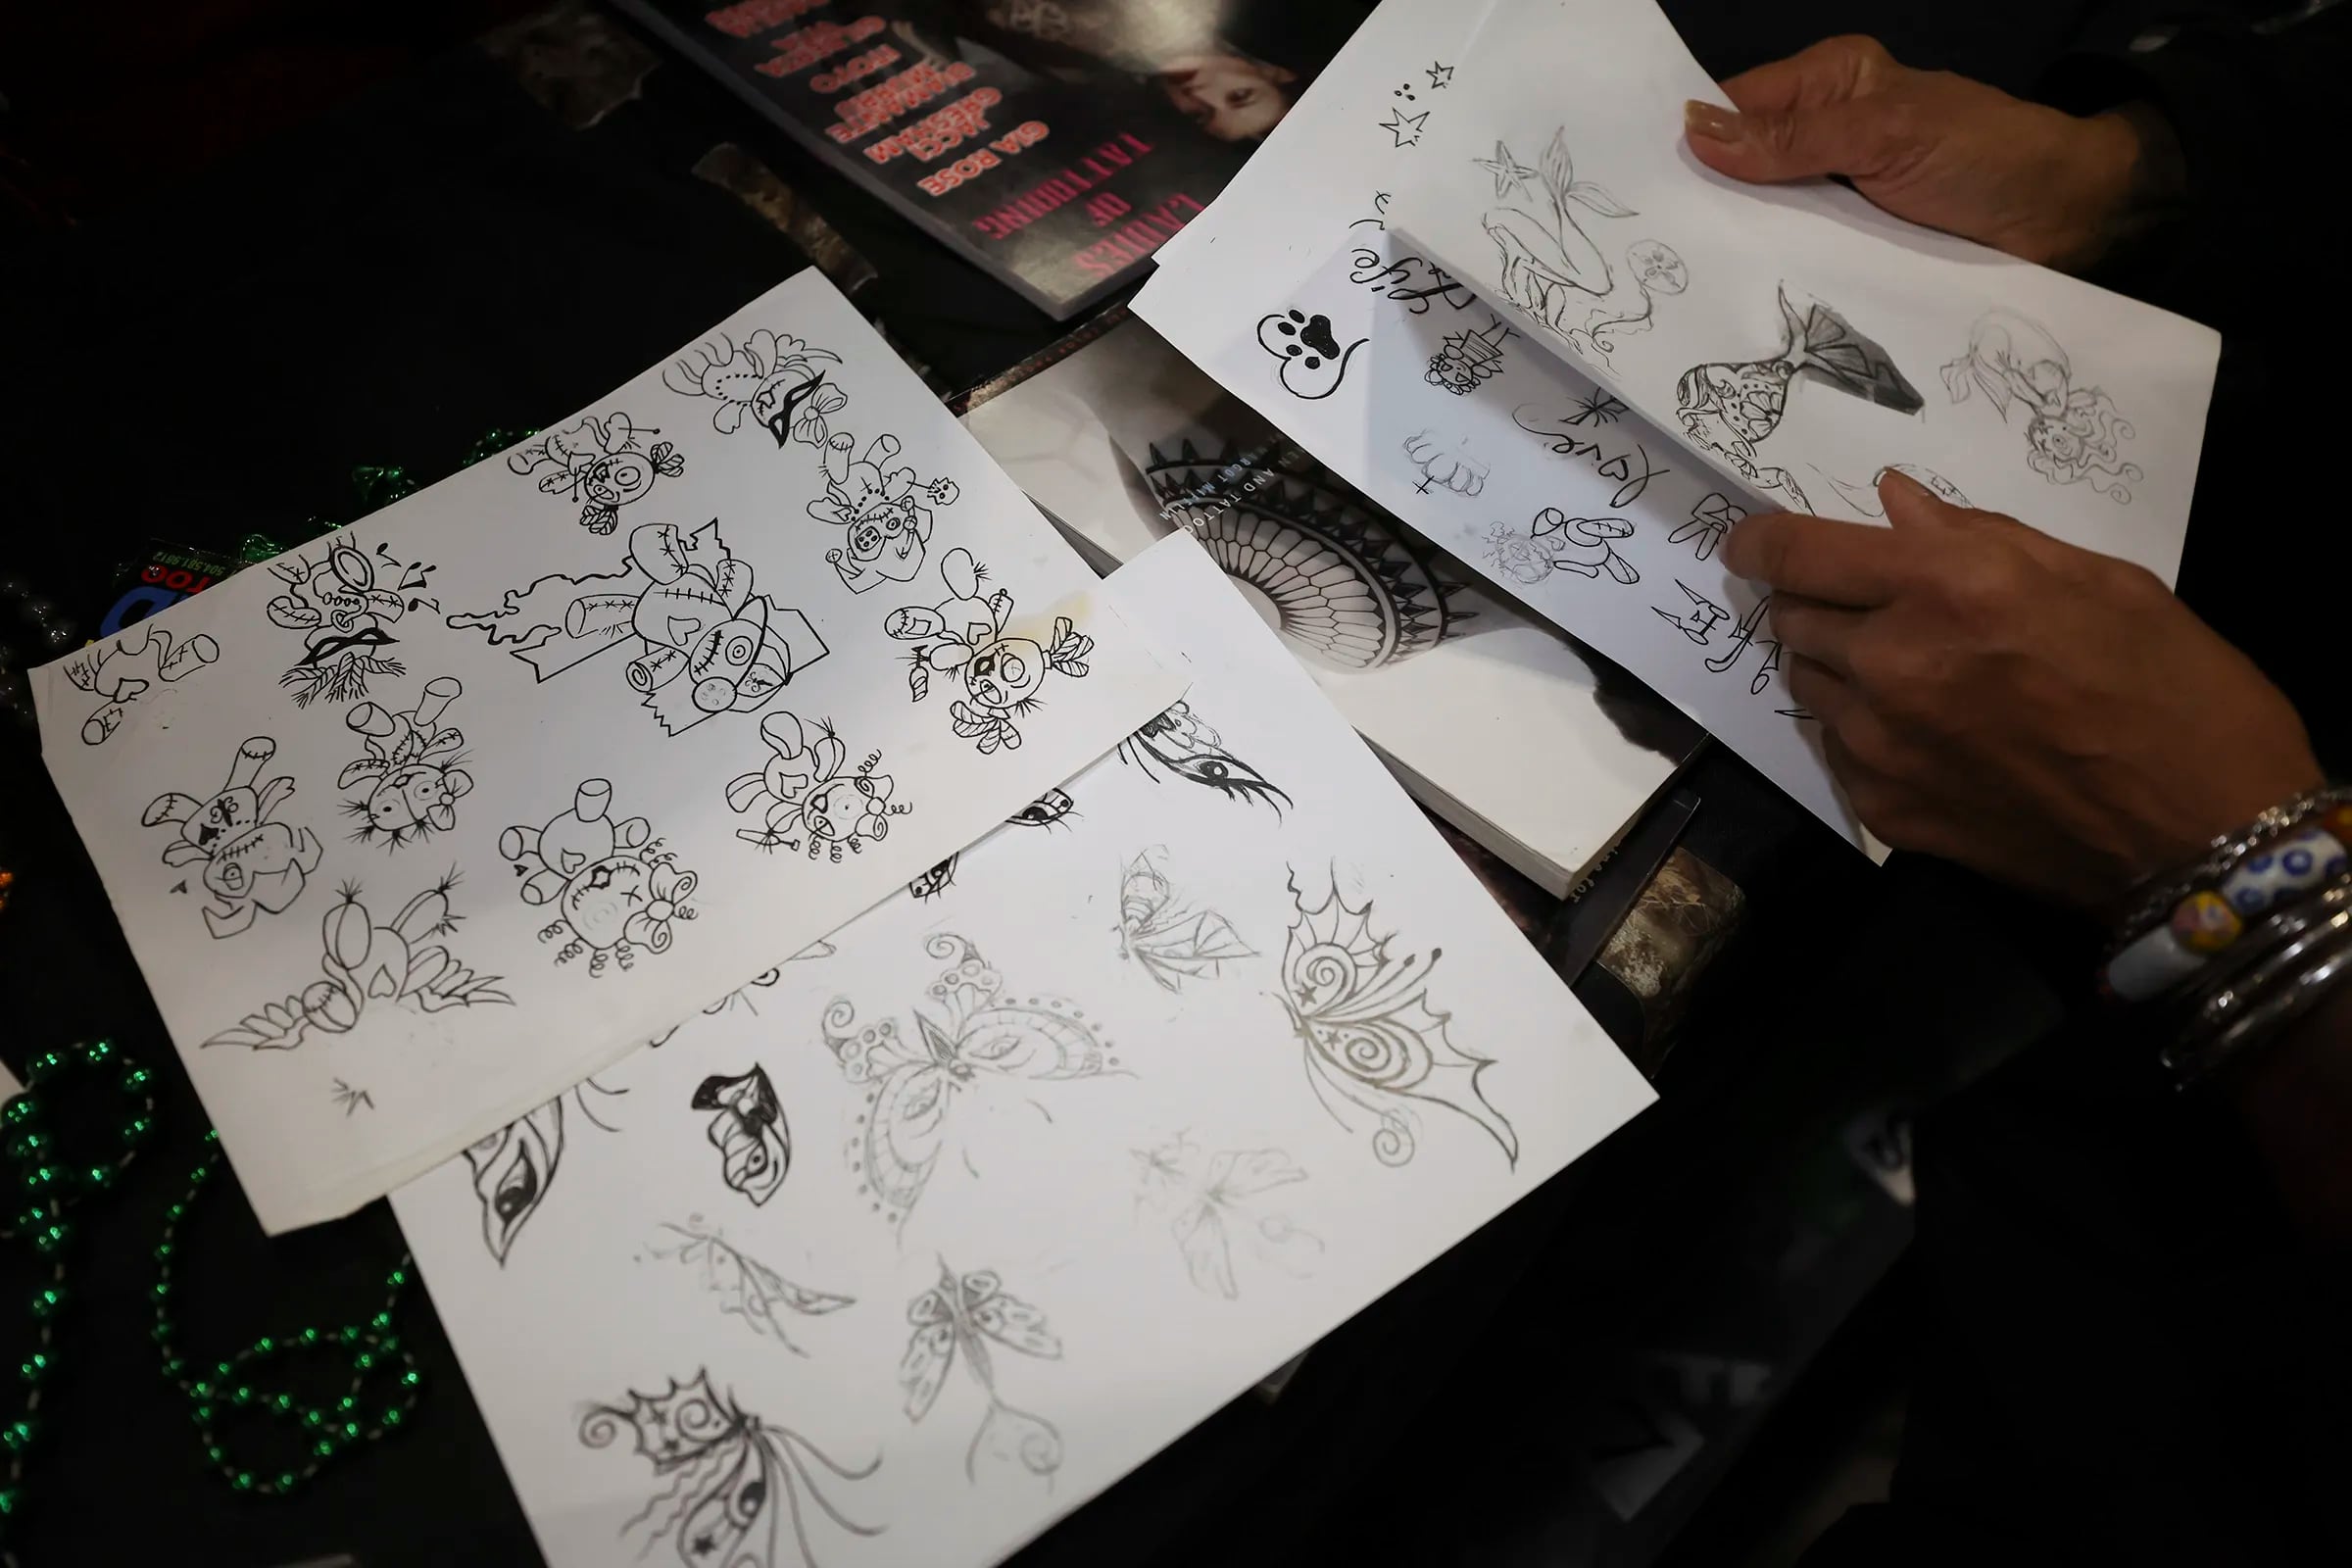 Tattoo artist Jacci Gresham shows her drawings at the Philadelphia Tattoo Arts Festival.